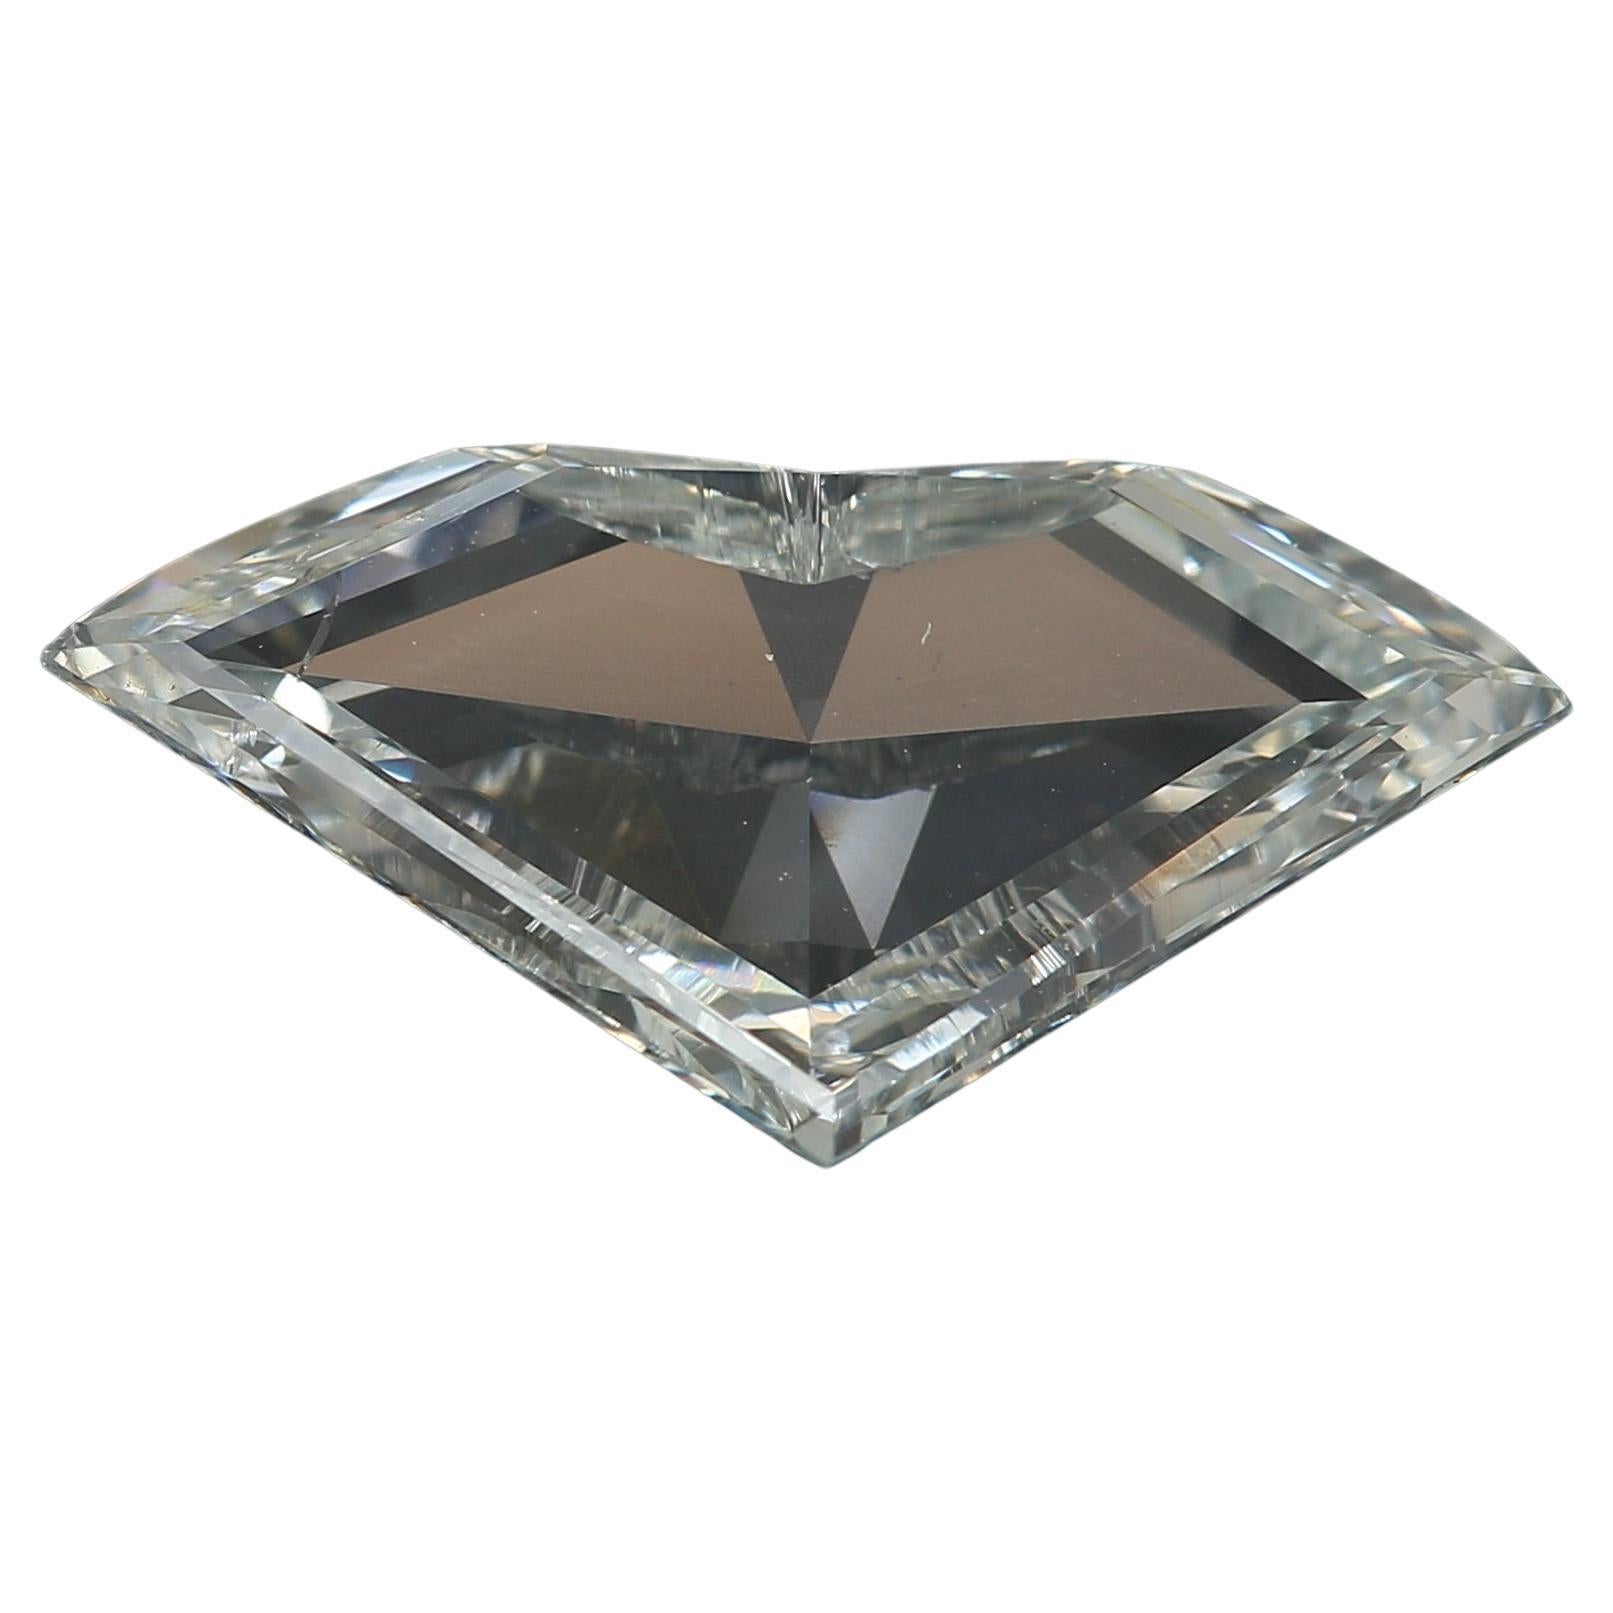 What is a shield cut diamond?